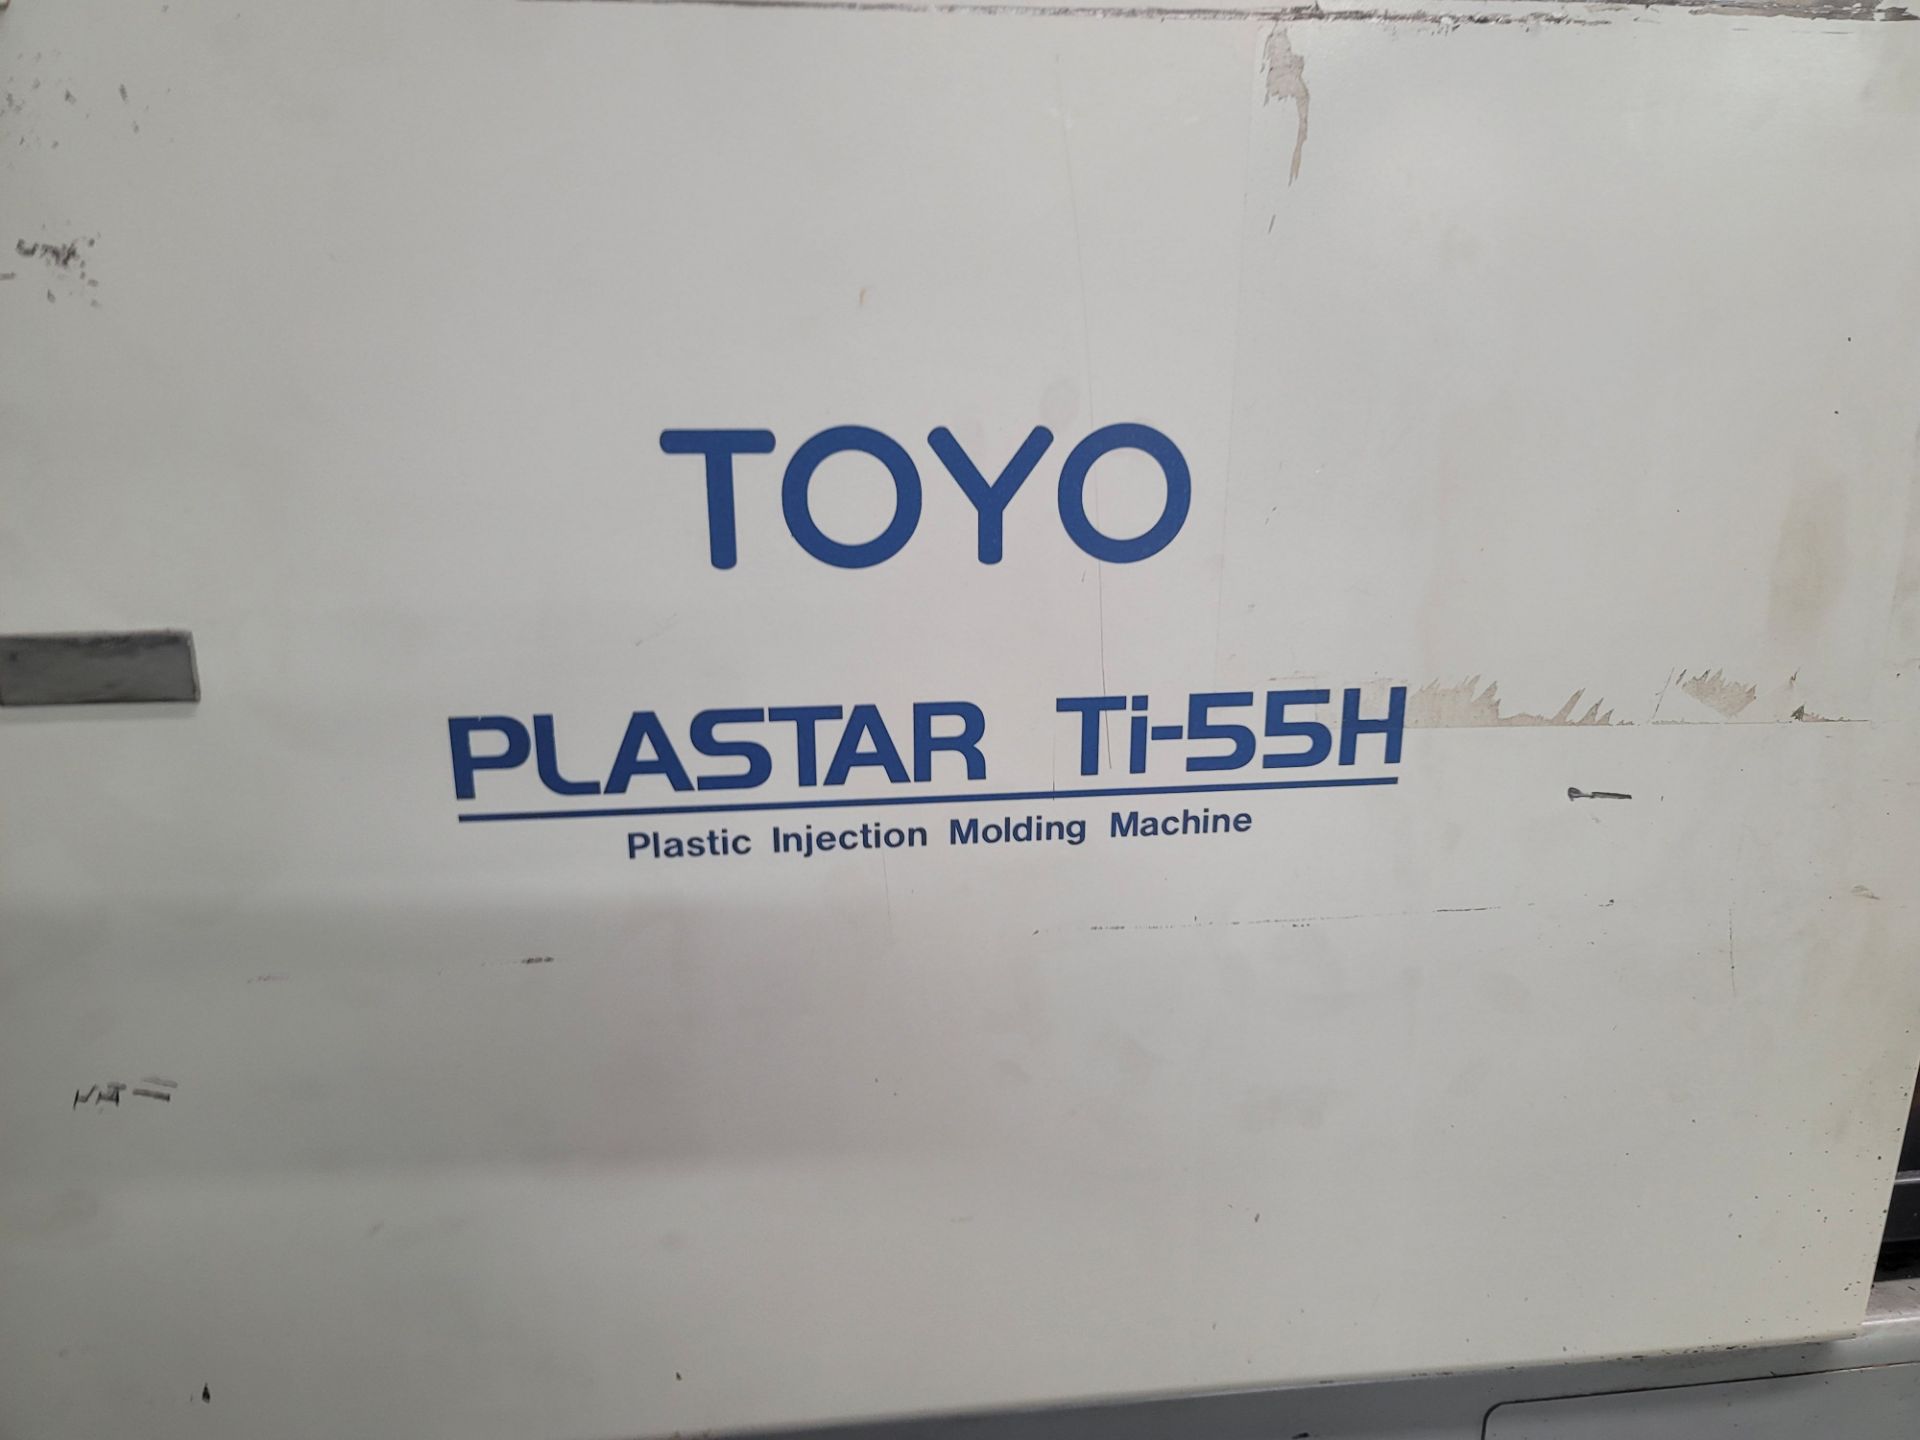 TOYO PLASTAR Ti-55H PLASTIC INJECTION MOLDING MACHINE, 55 TON CAPACITY, 2.7 OZ SHOT SIZE, 18" X - Image 2 of 7